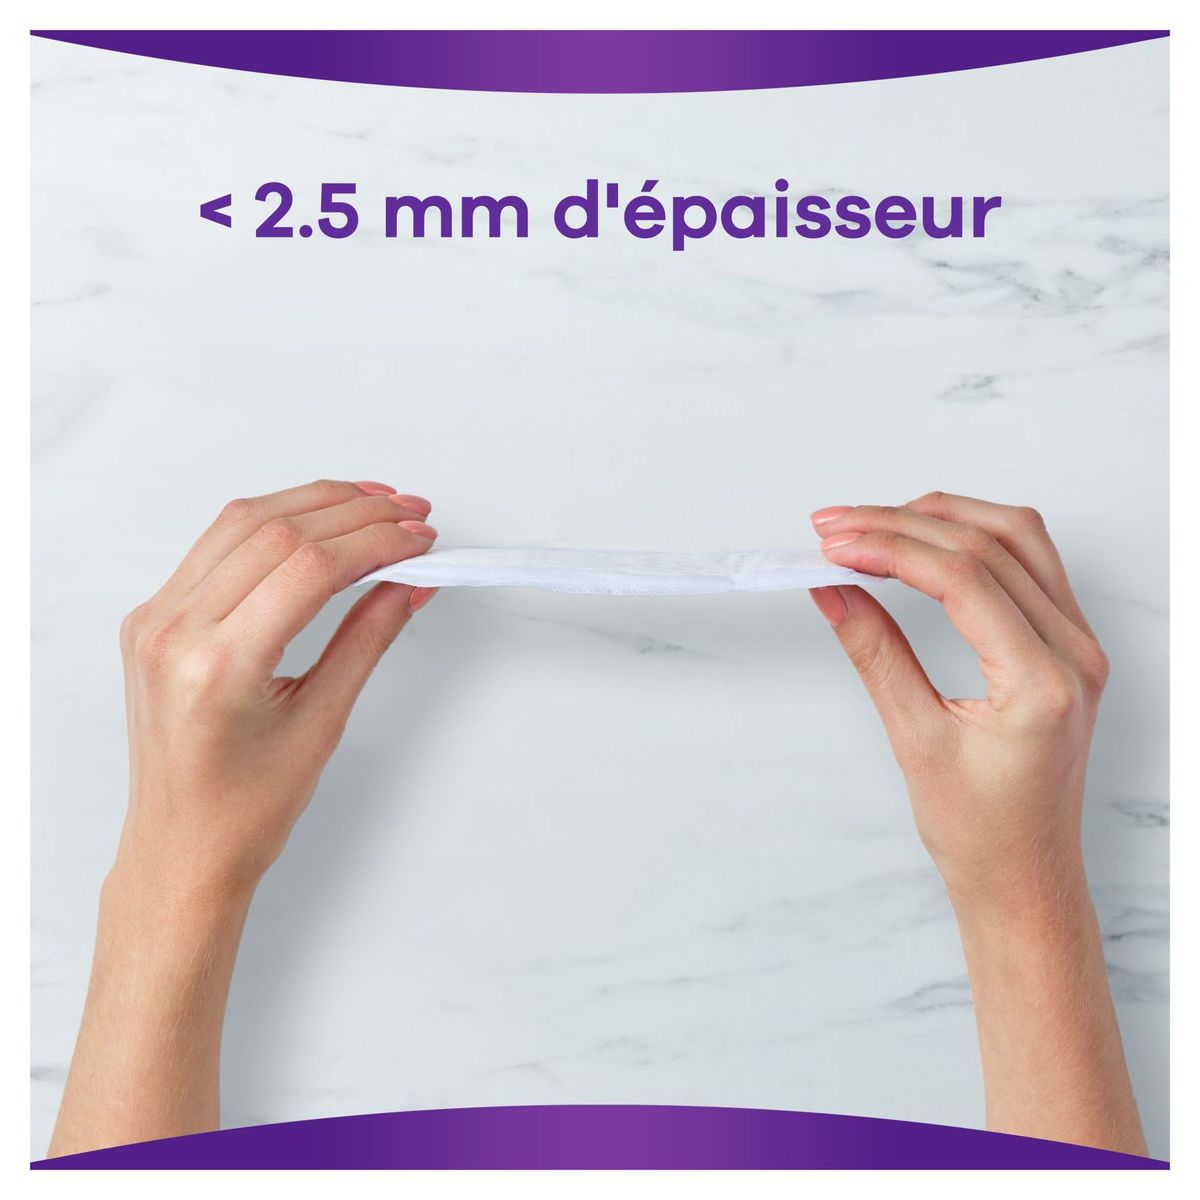 Always Discreet Protège-Slip Pour Fuites Urinaires Femmes Normal x28